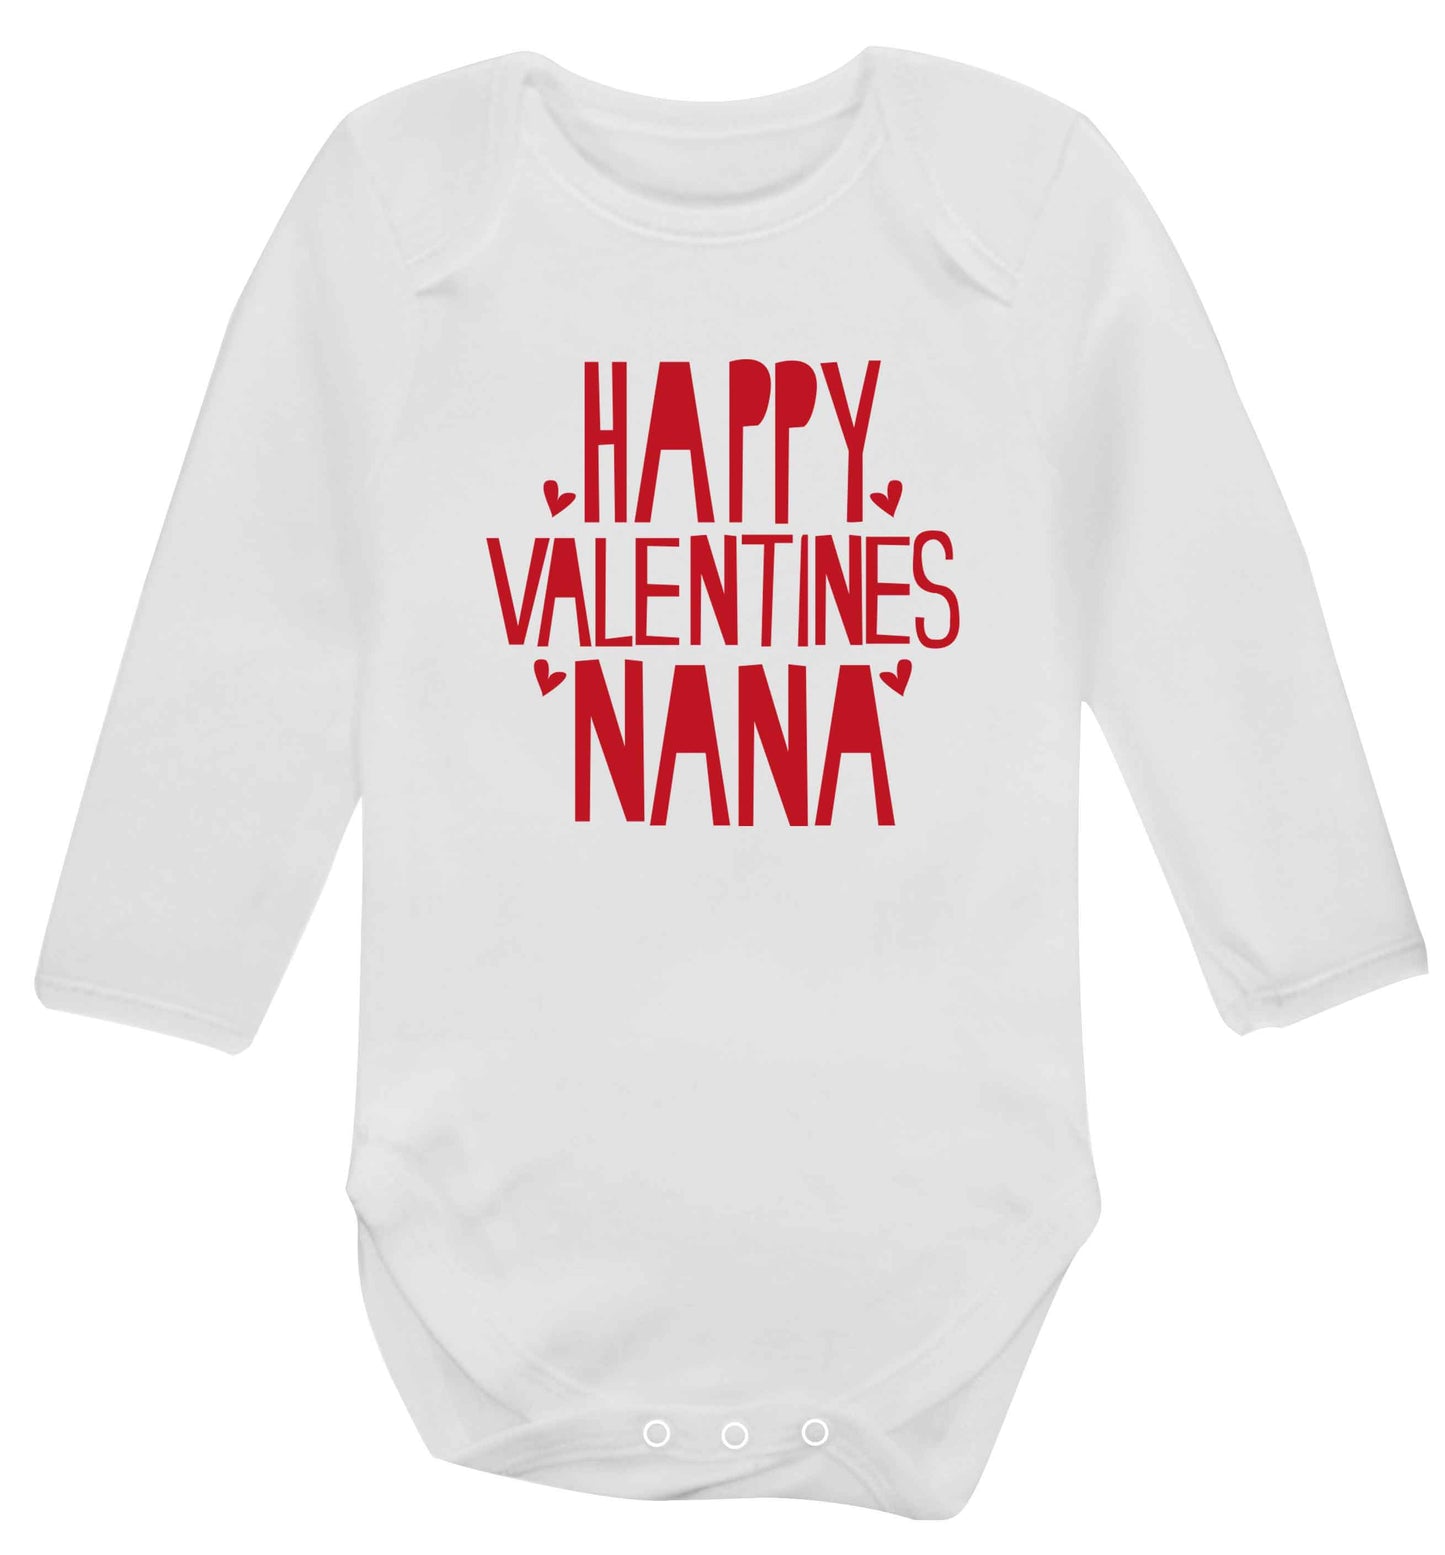 Happy valentines nana baby vest long sleeved white 6-12 months